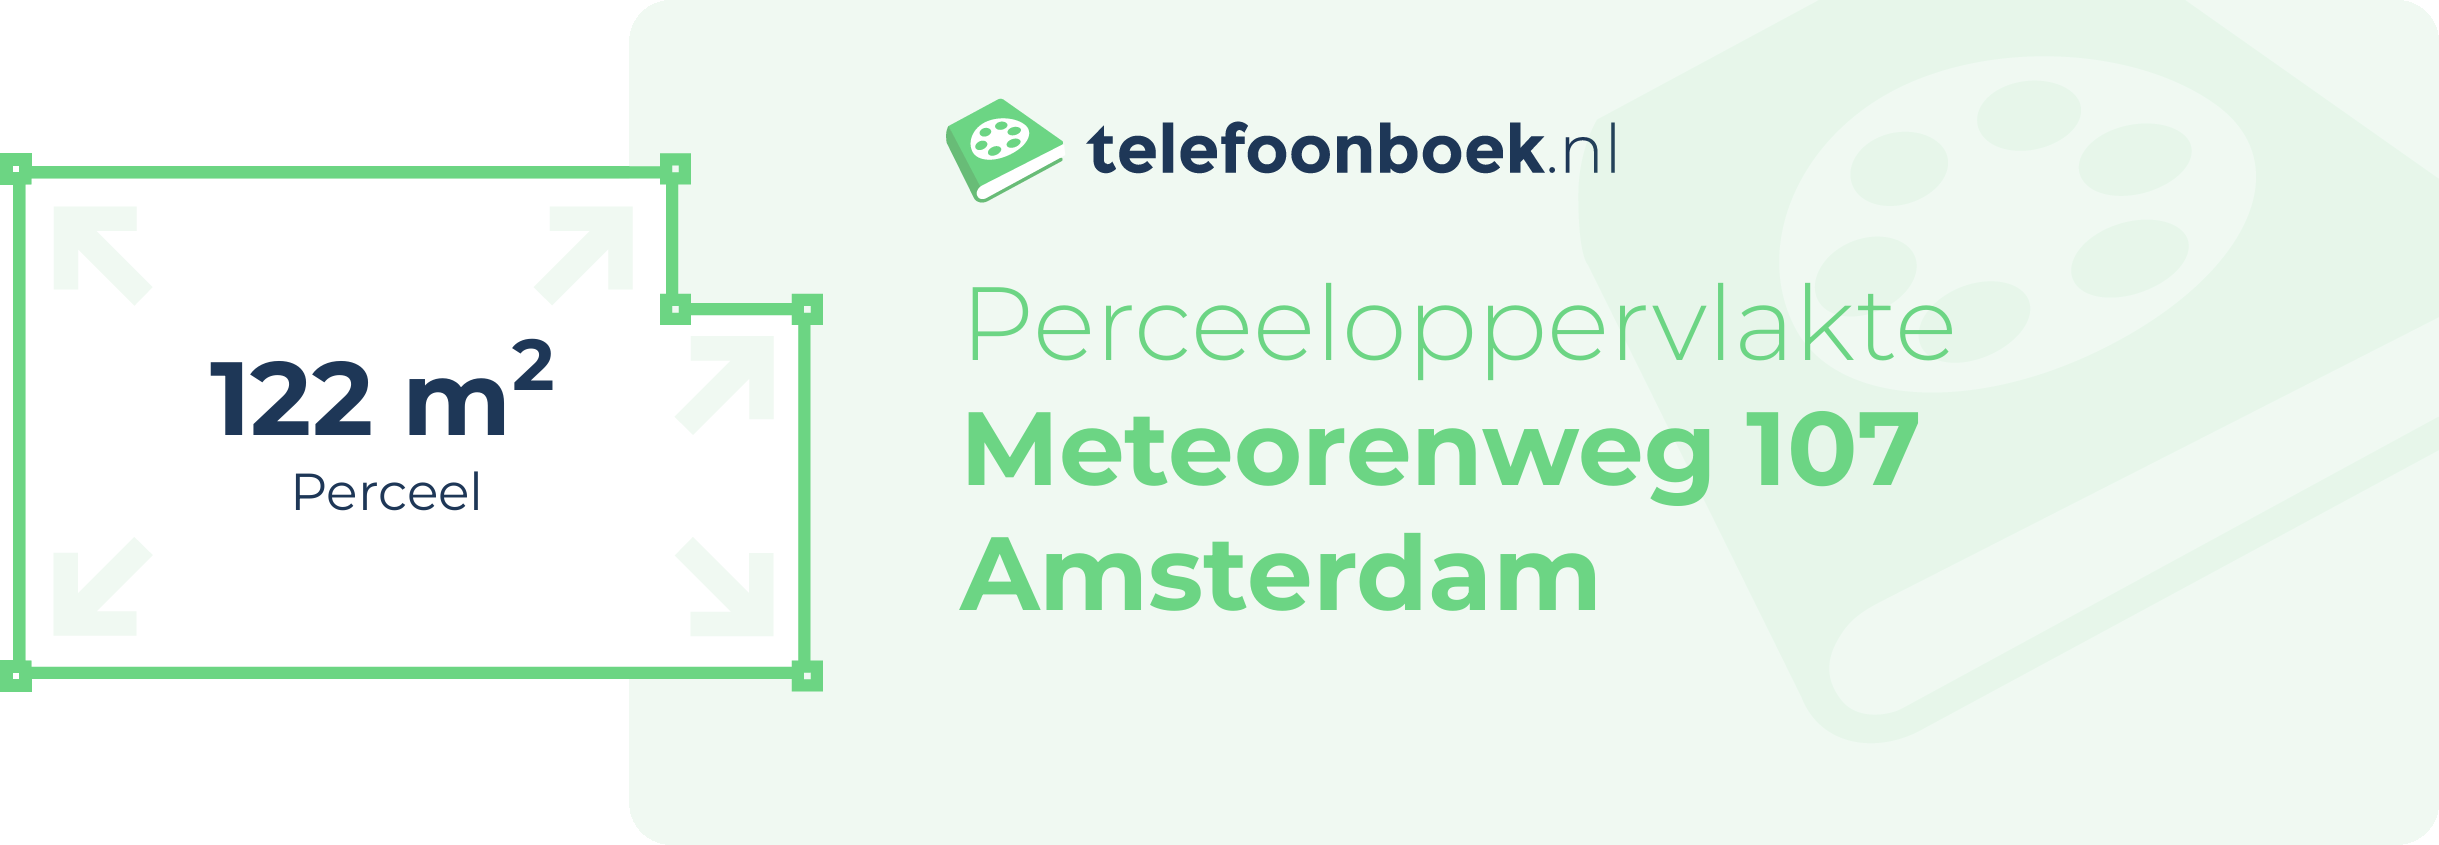 Perceeloppervlakte Meteorenweg 107 Amsterdam